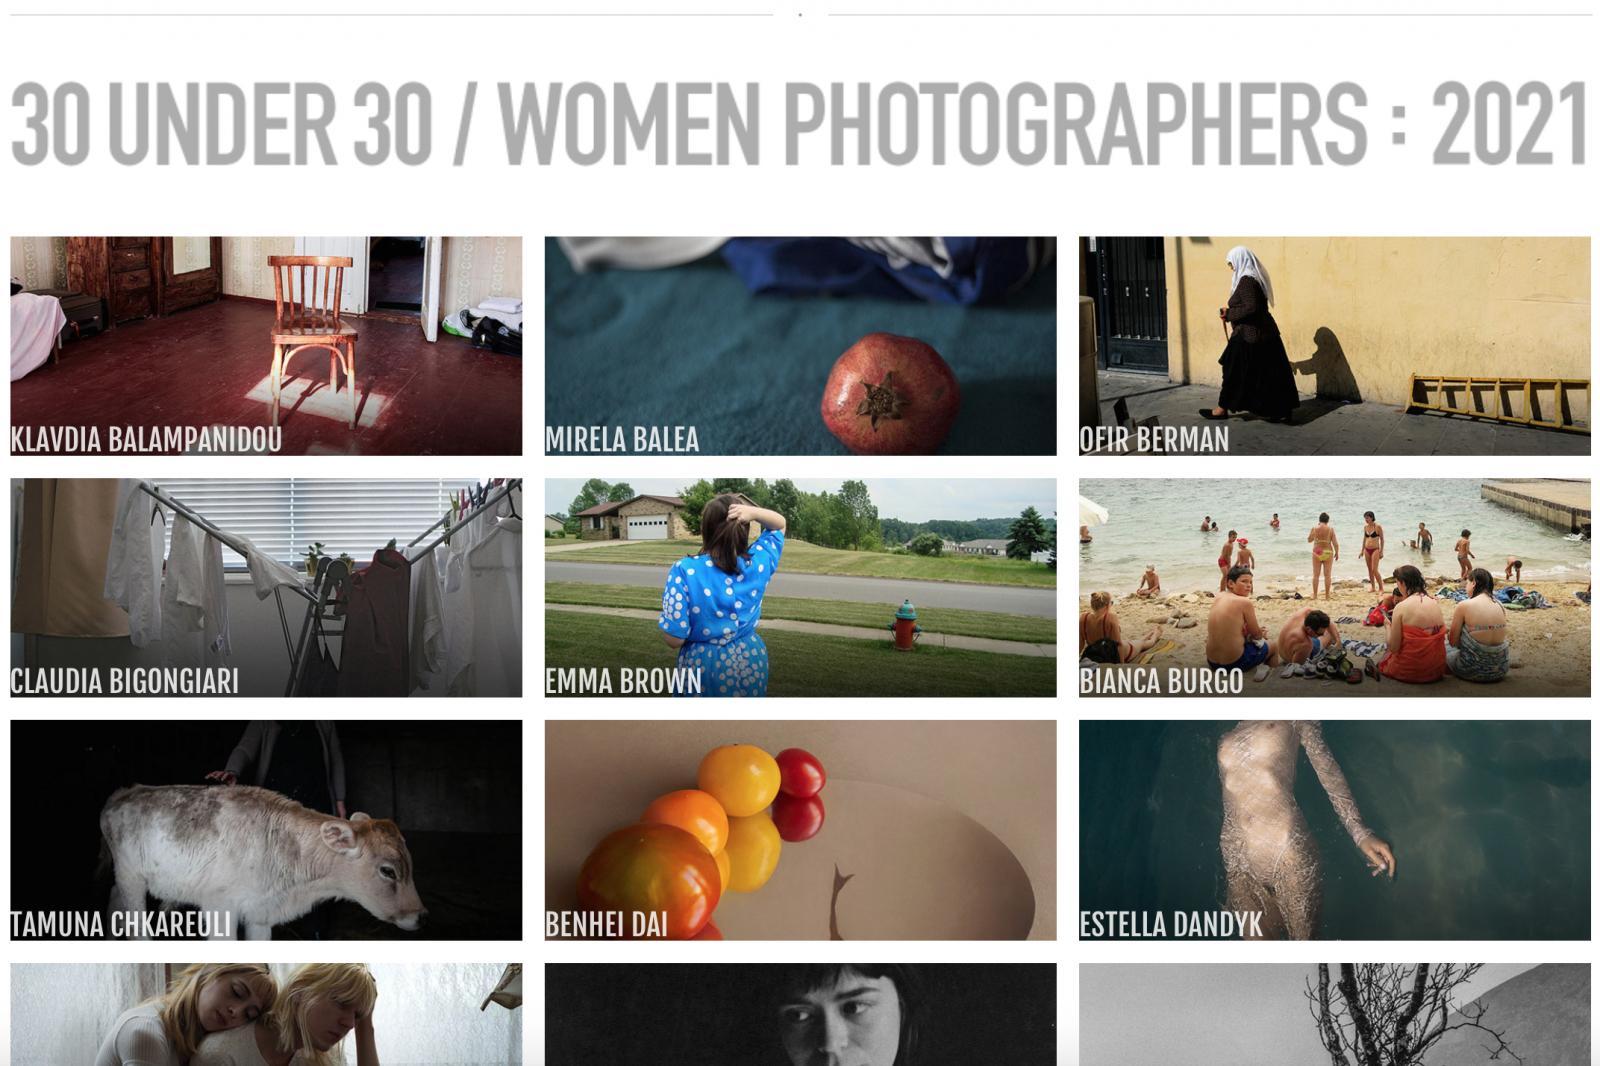 30 Under 30 Women Photographers / 2021